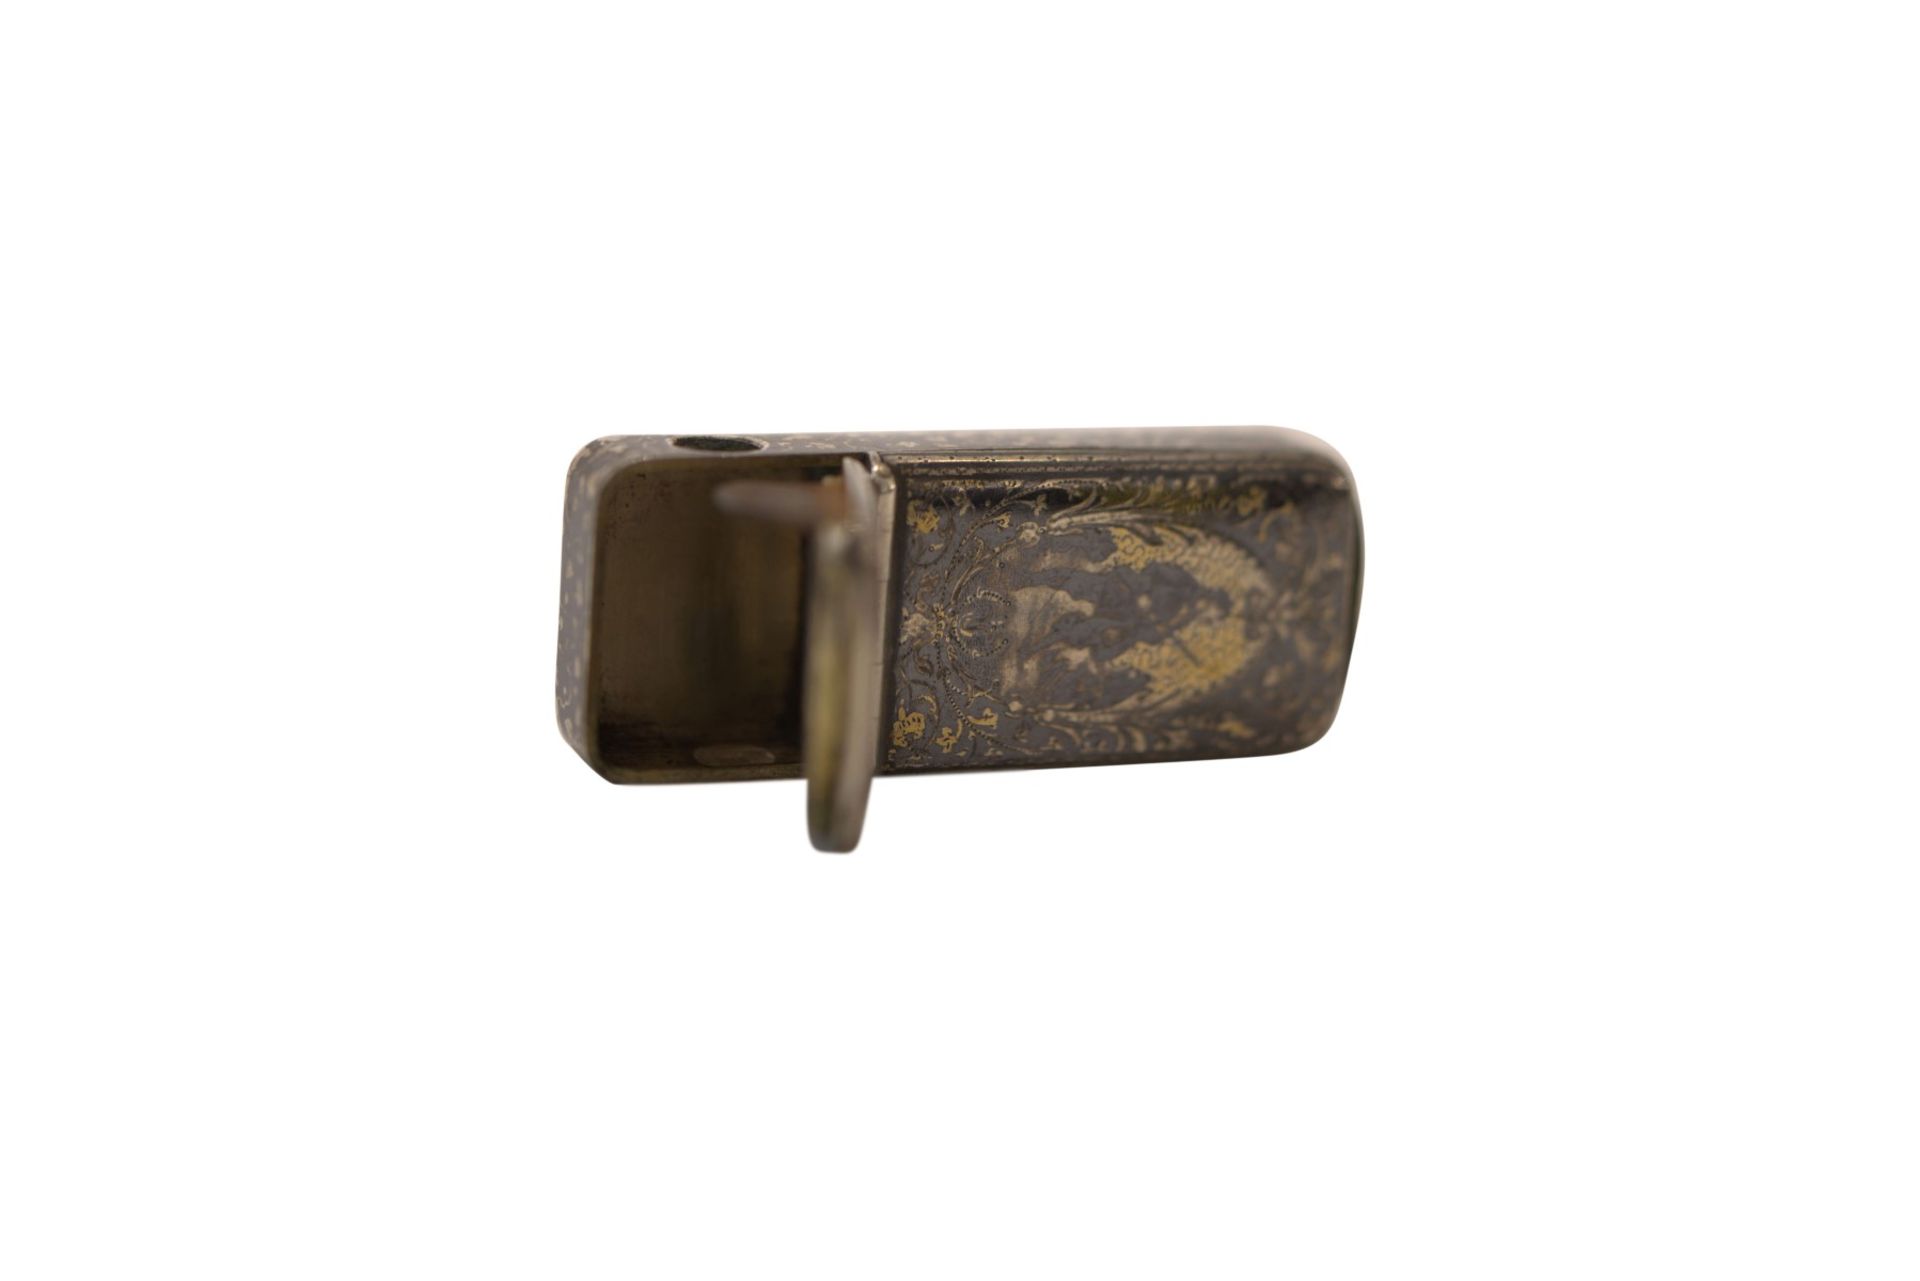 Cigar cutter case silver 800/000 fine - Image 2 of 4